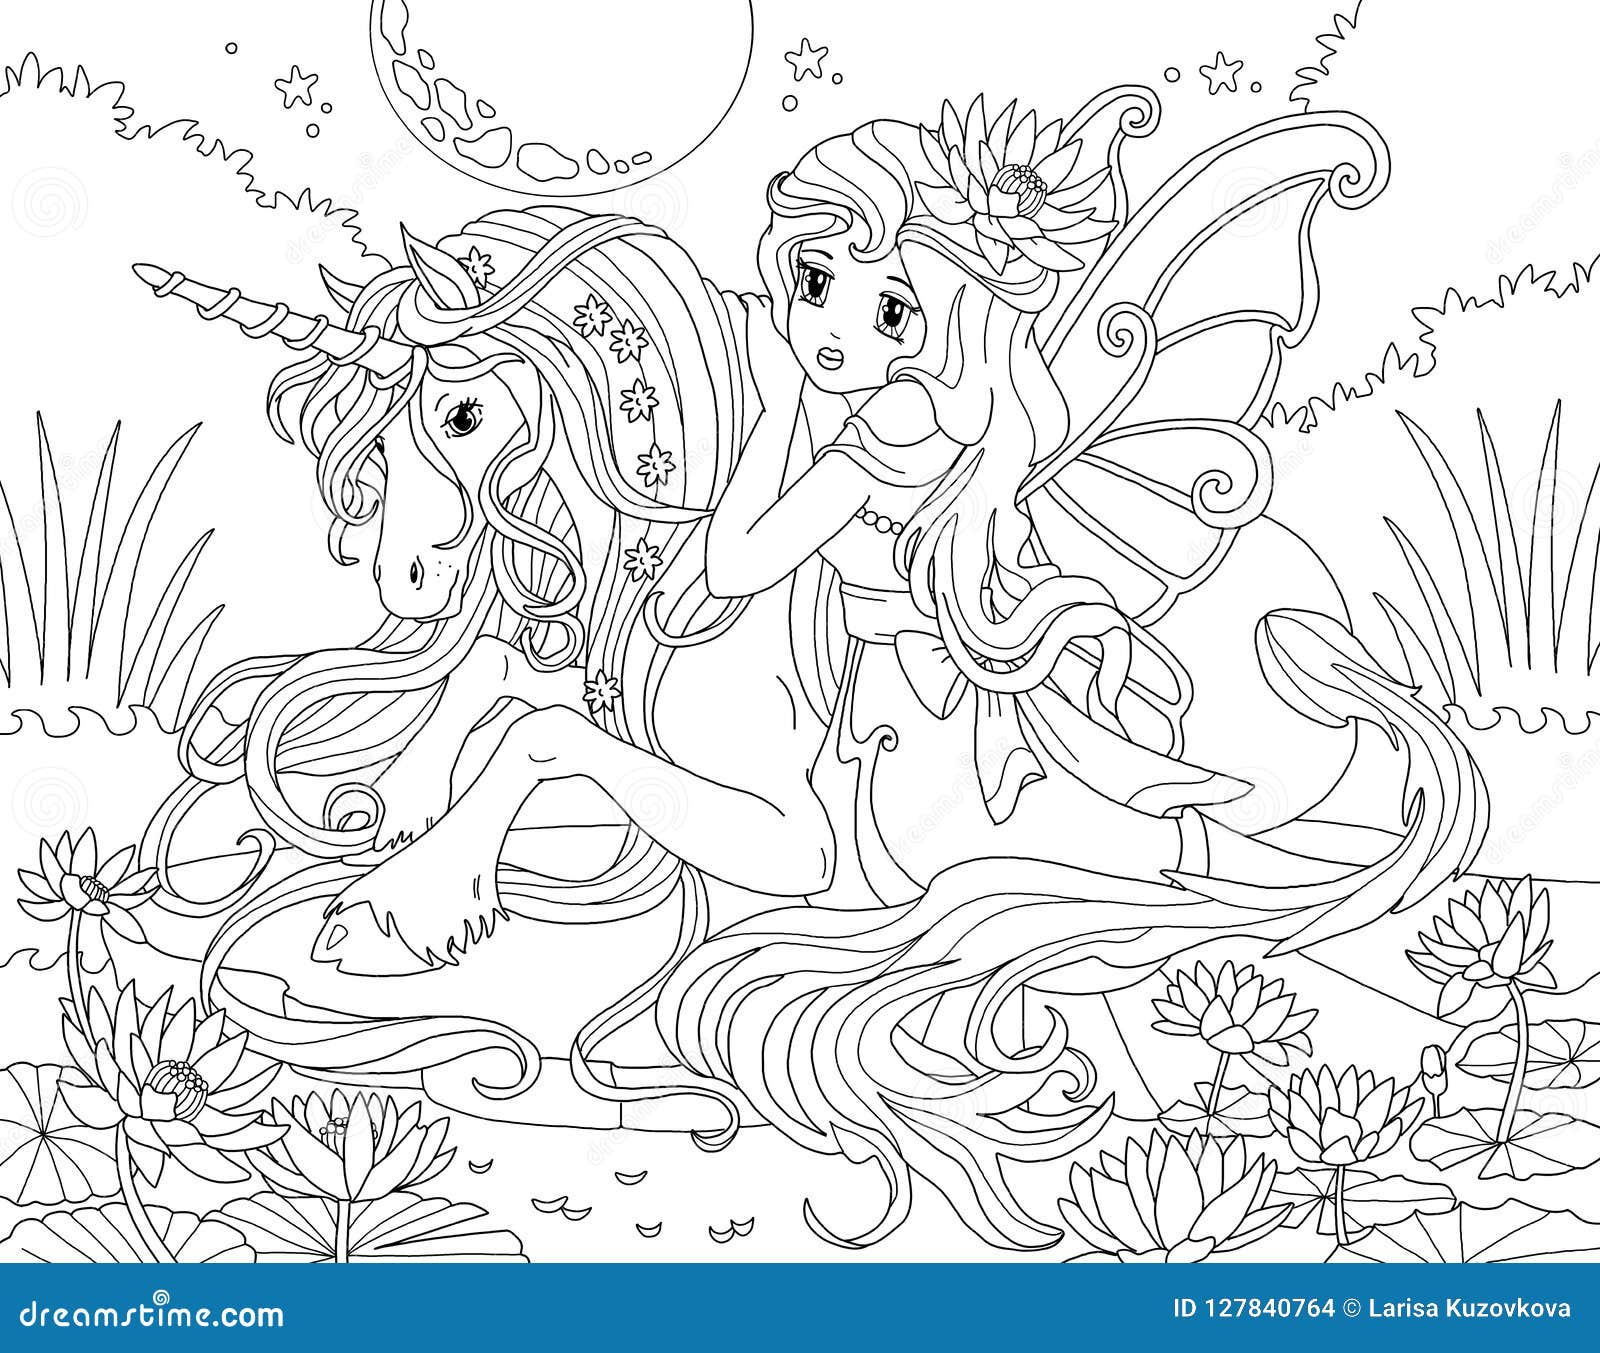 Unicorn Coloring Page Stock Illustrations – 20,1220 Unicorn Coloring ...